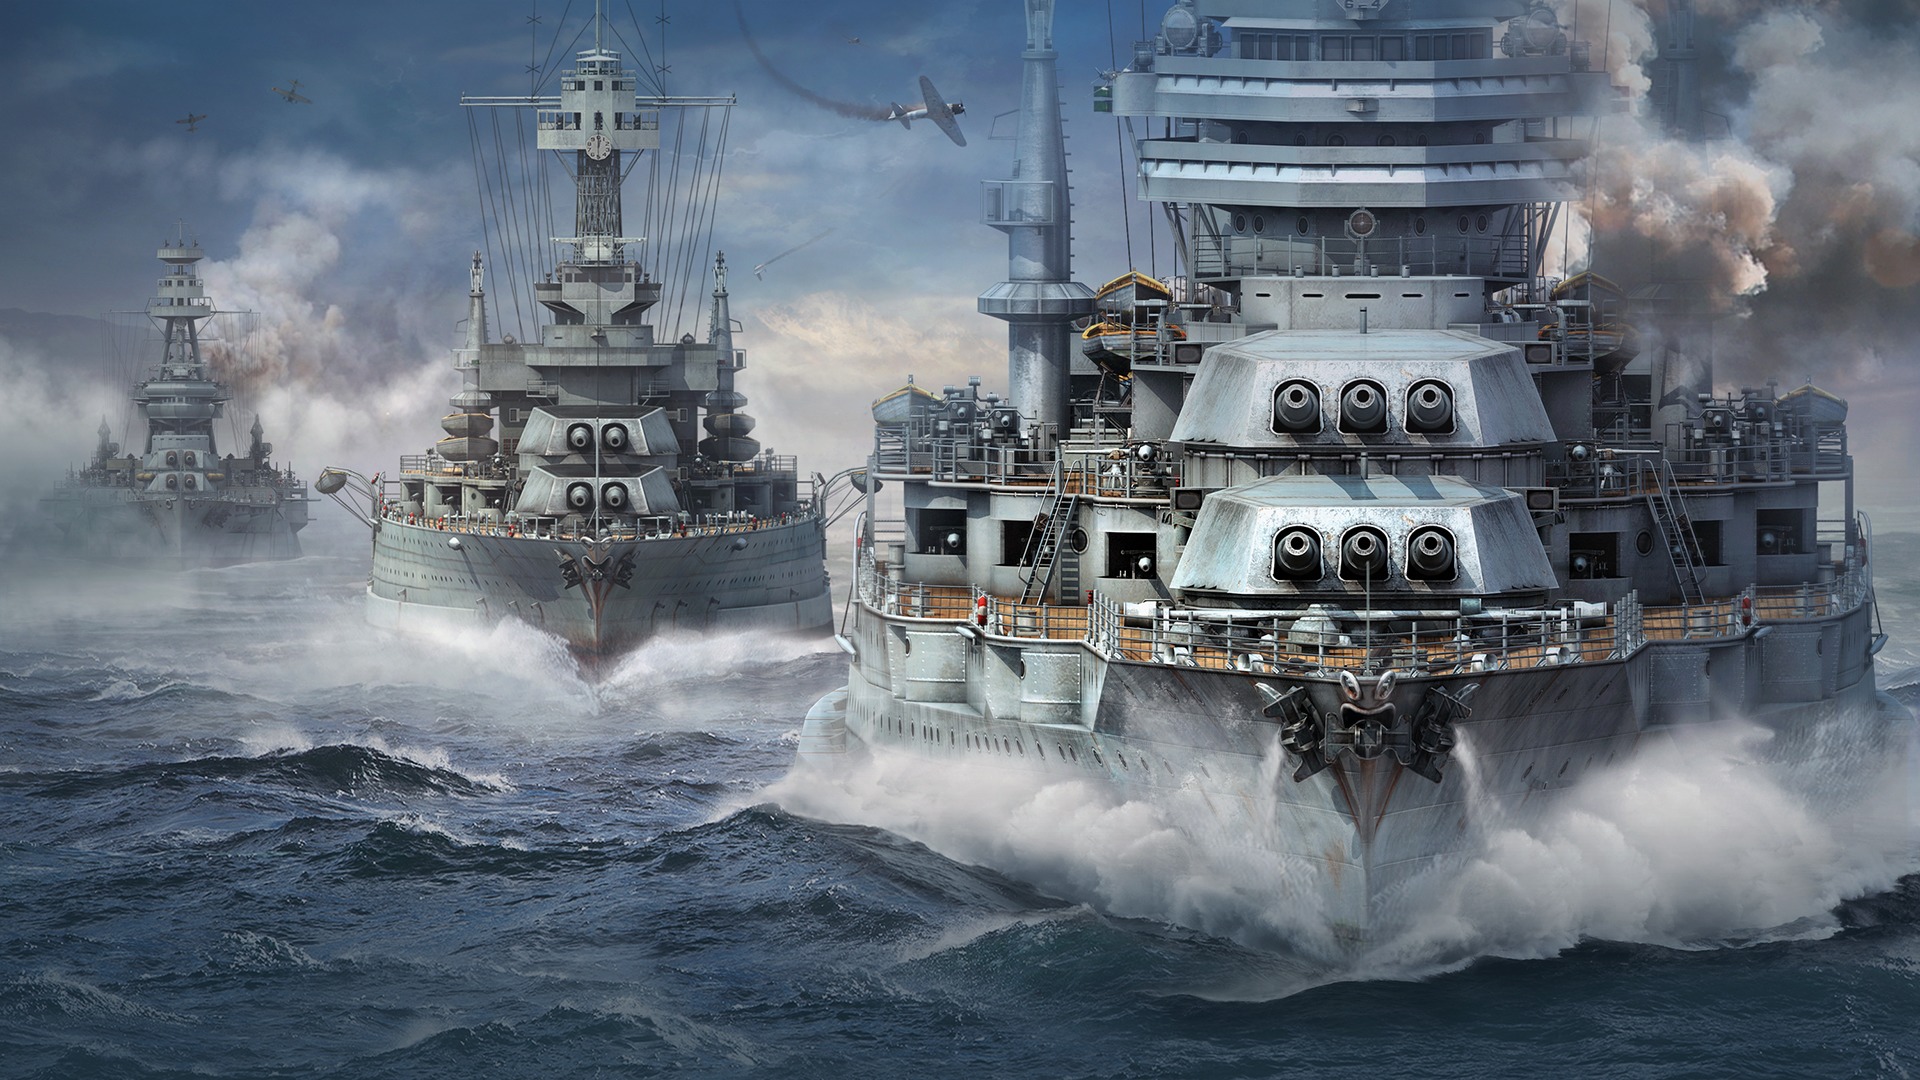 Free Download World Of Warships Wallpaper Wide Desktop 263vif05 Images, Photos, Reviews